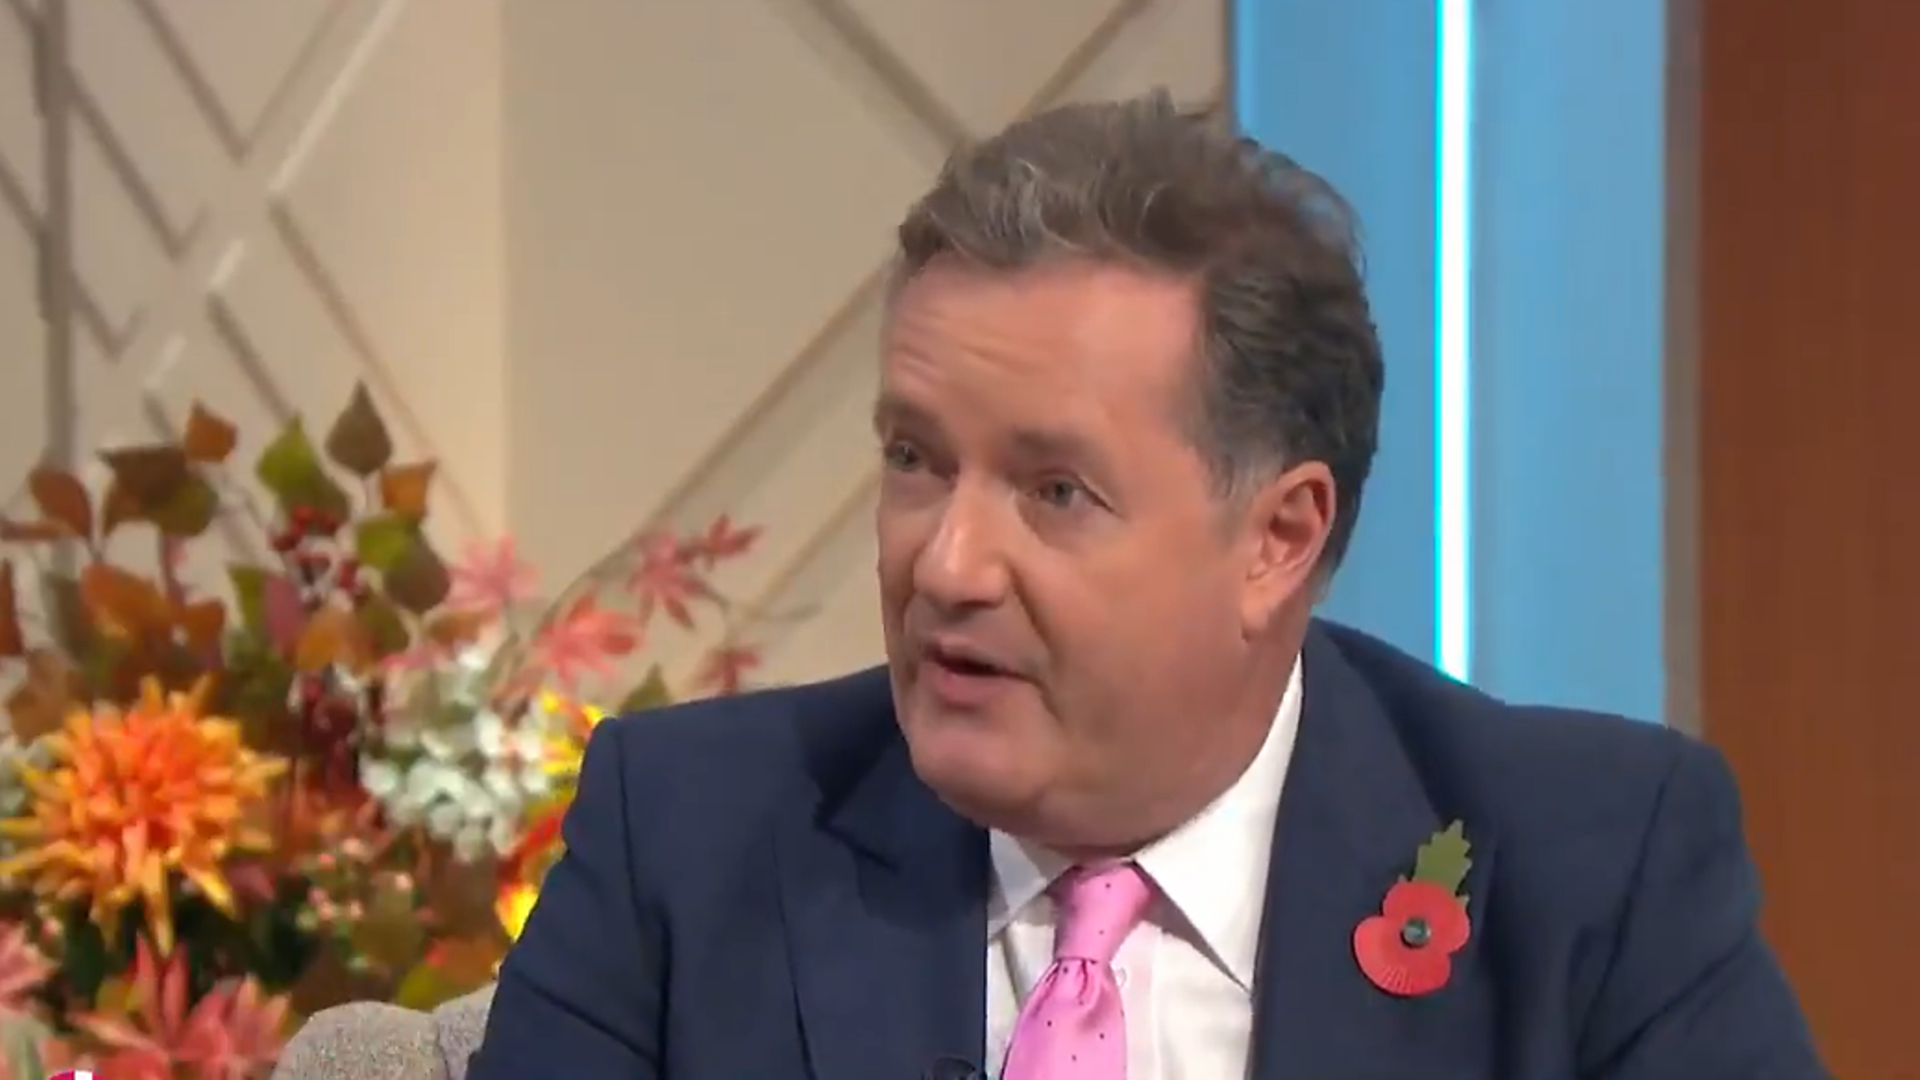 Piers Morgan criticises his "good friend" Donald Trump on Lorraine - Credit: ITV